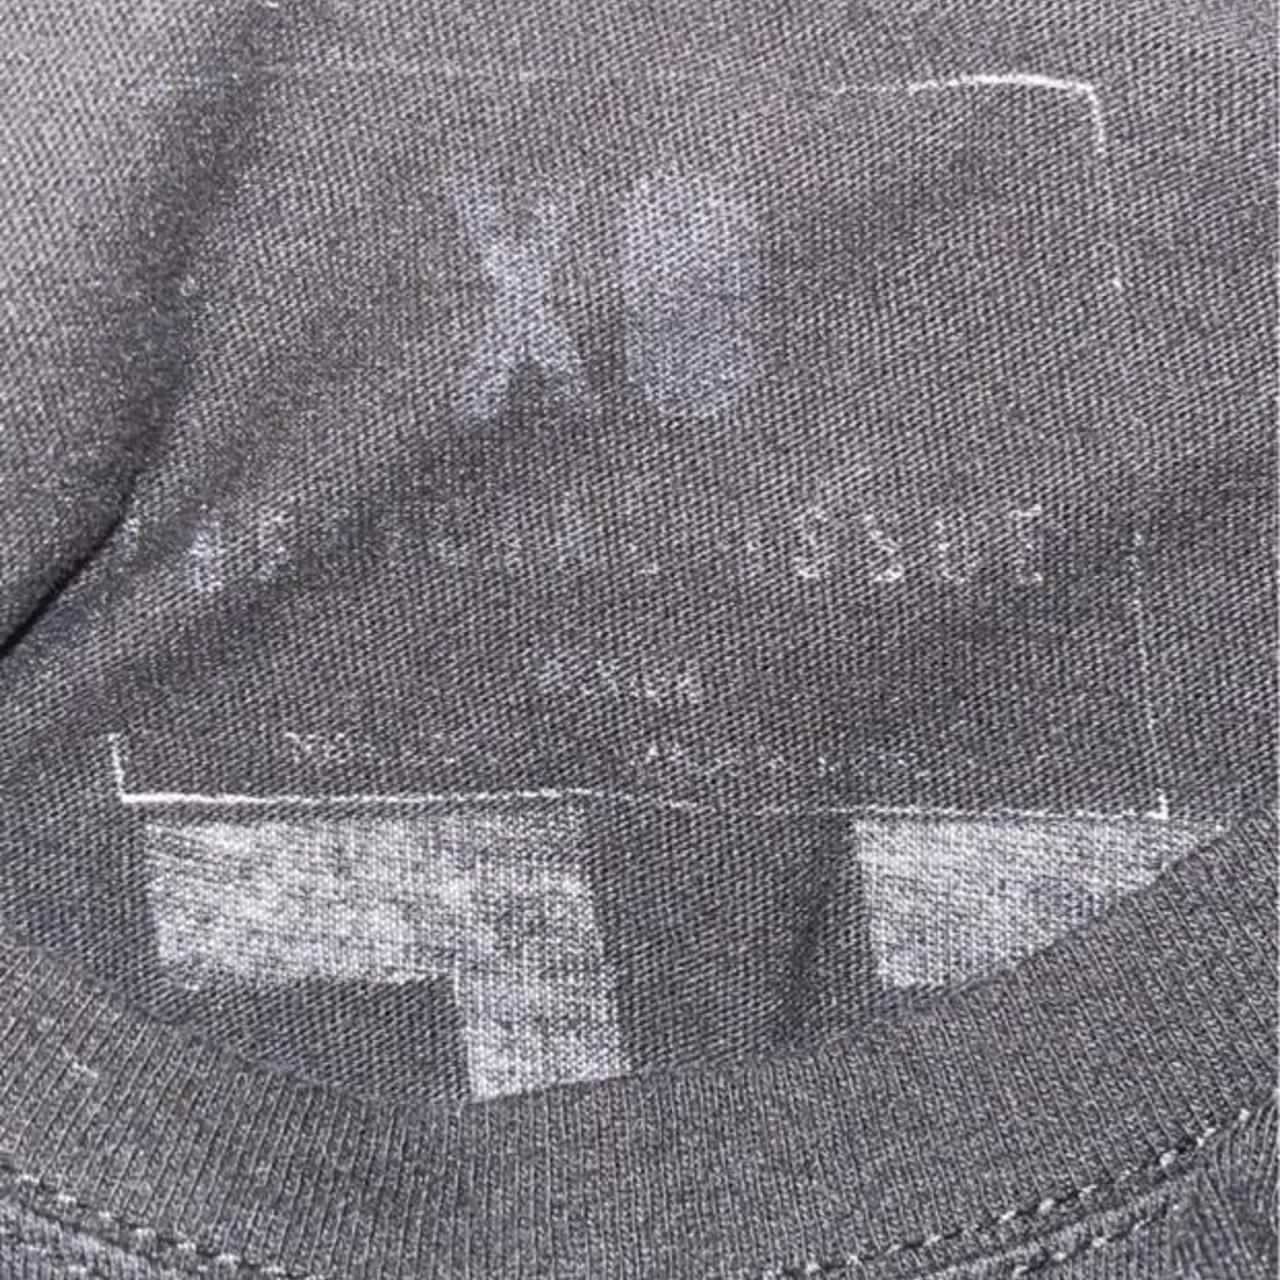 Official Issue XO The Weeknd Kiss Land shirt 💔 Size... - Depop